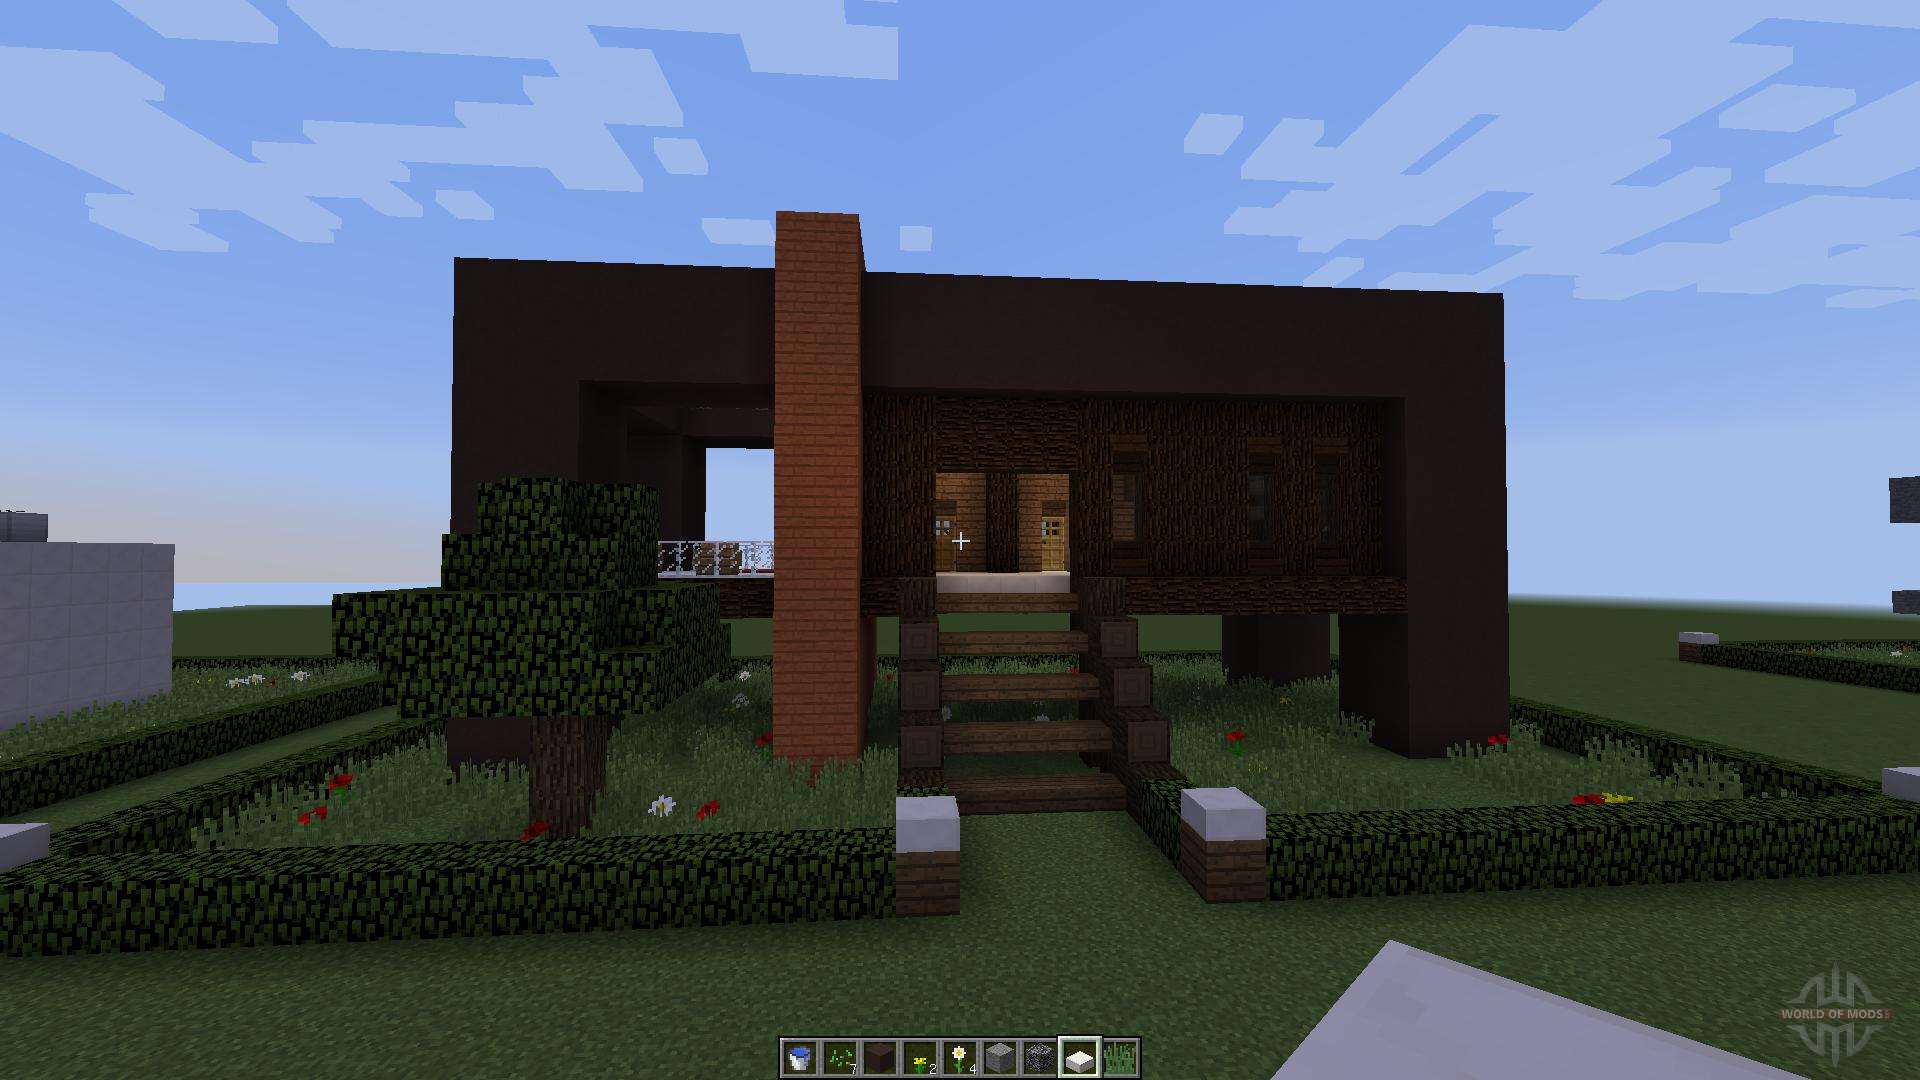 Slandot Modern House [1.8][1.8.8] para Minecraft